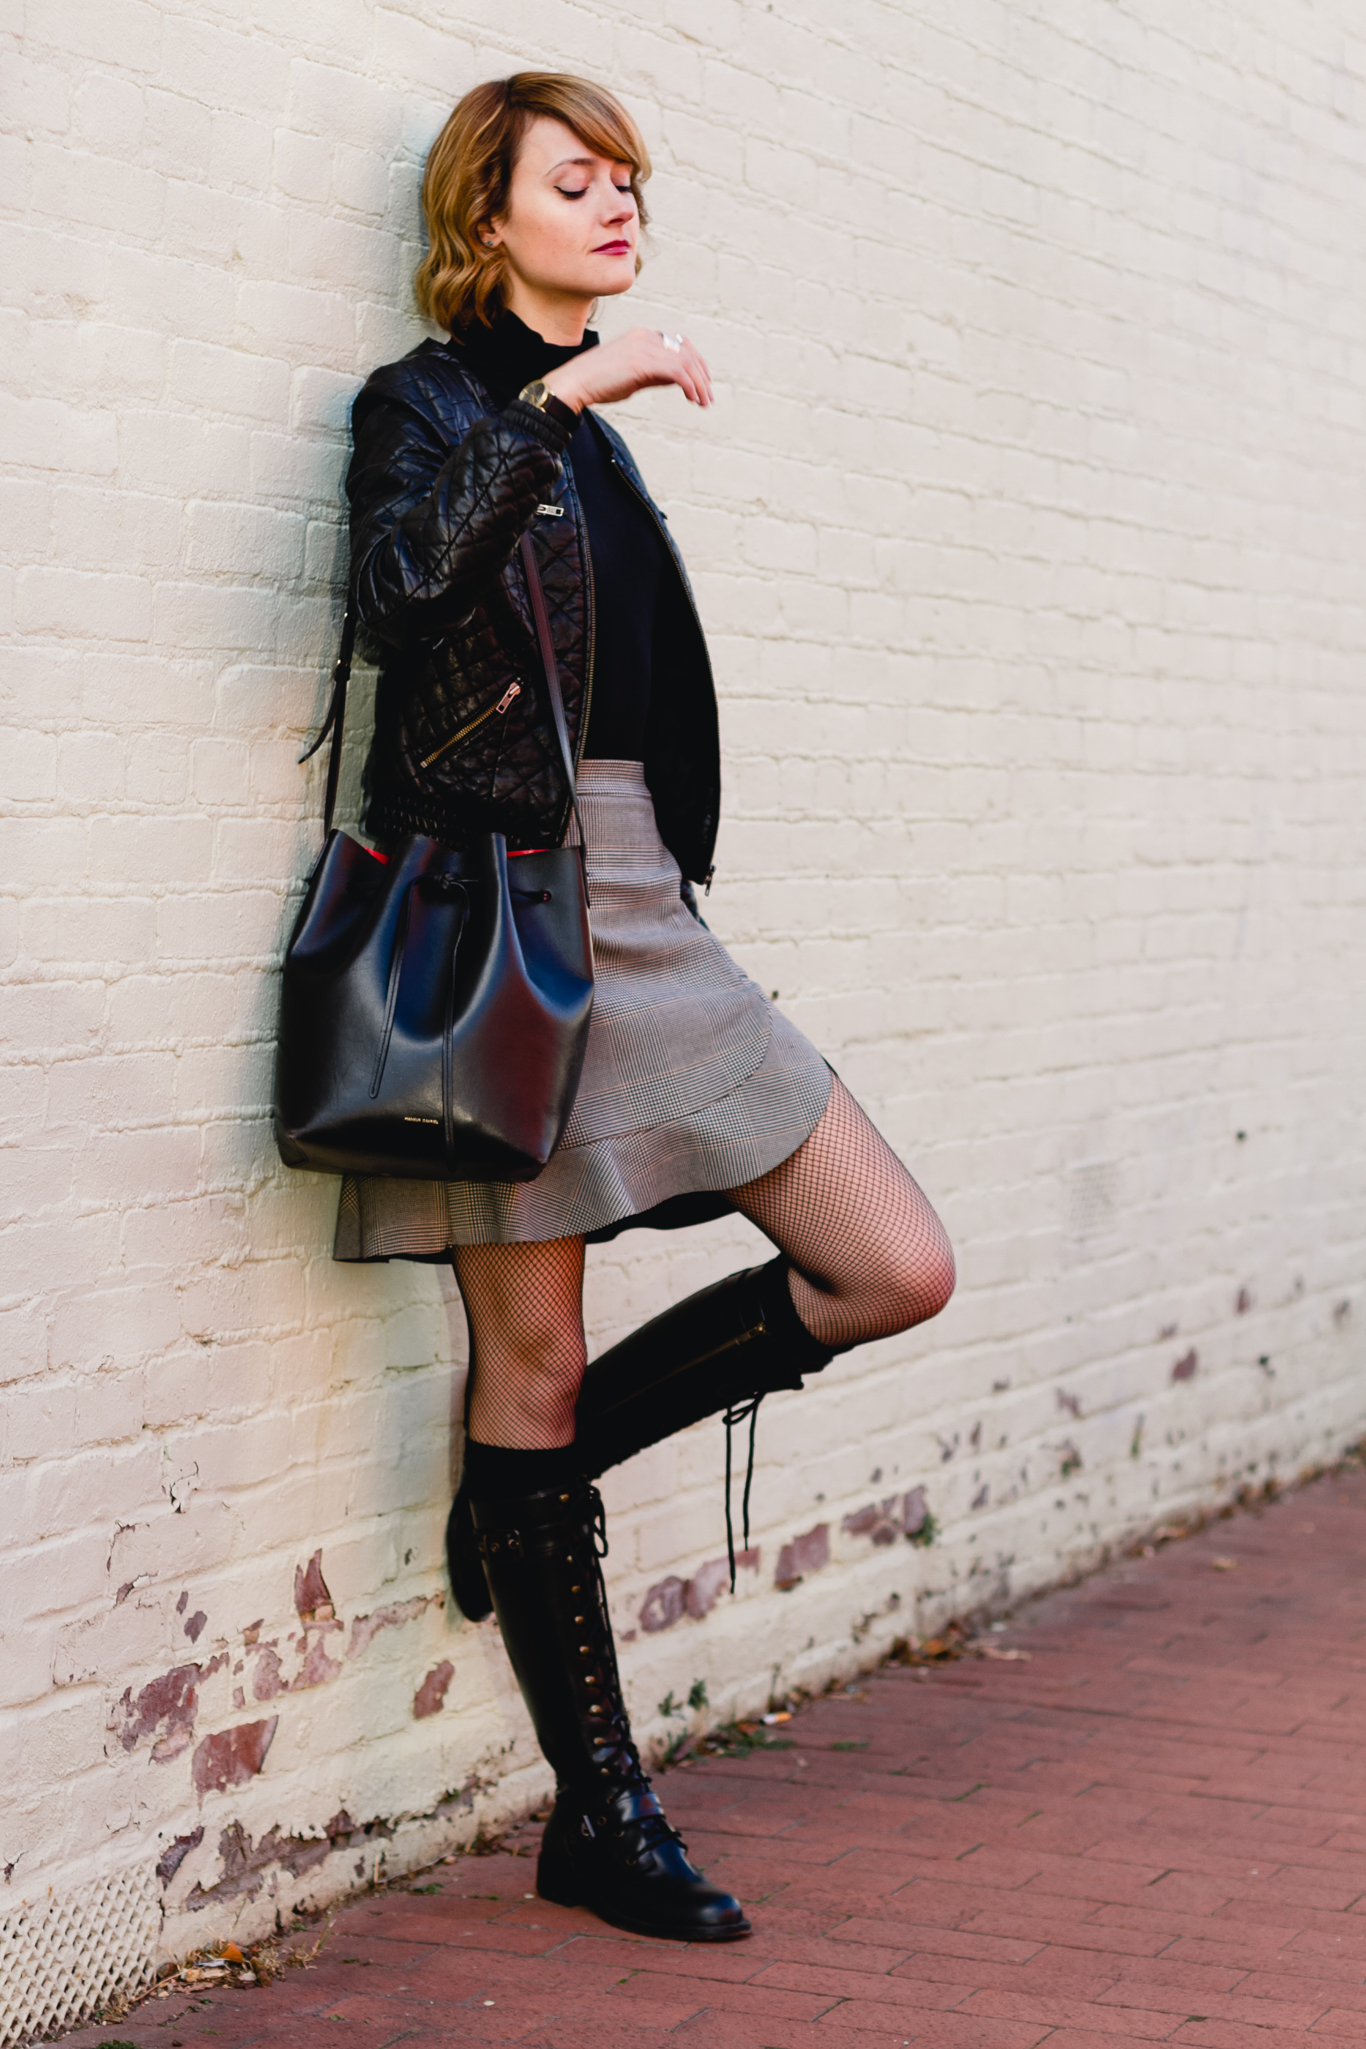 Zara plaid skirt and DKNY combat boots